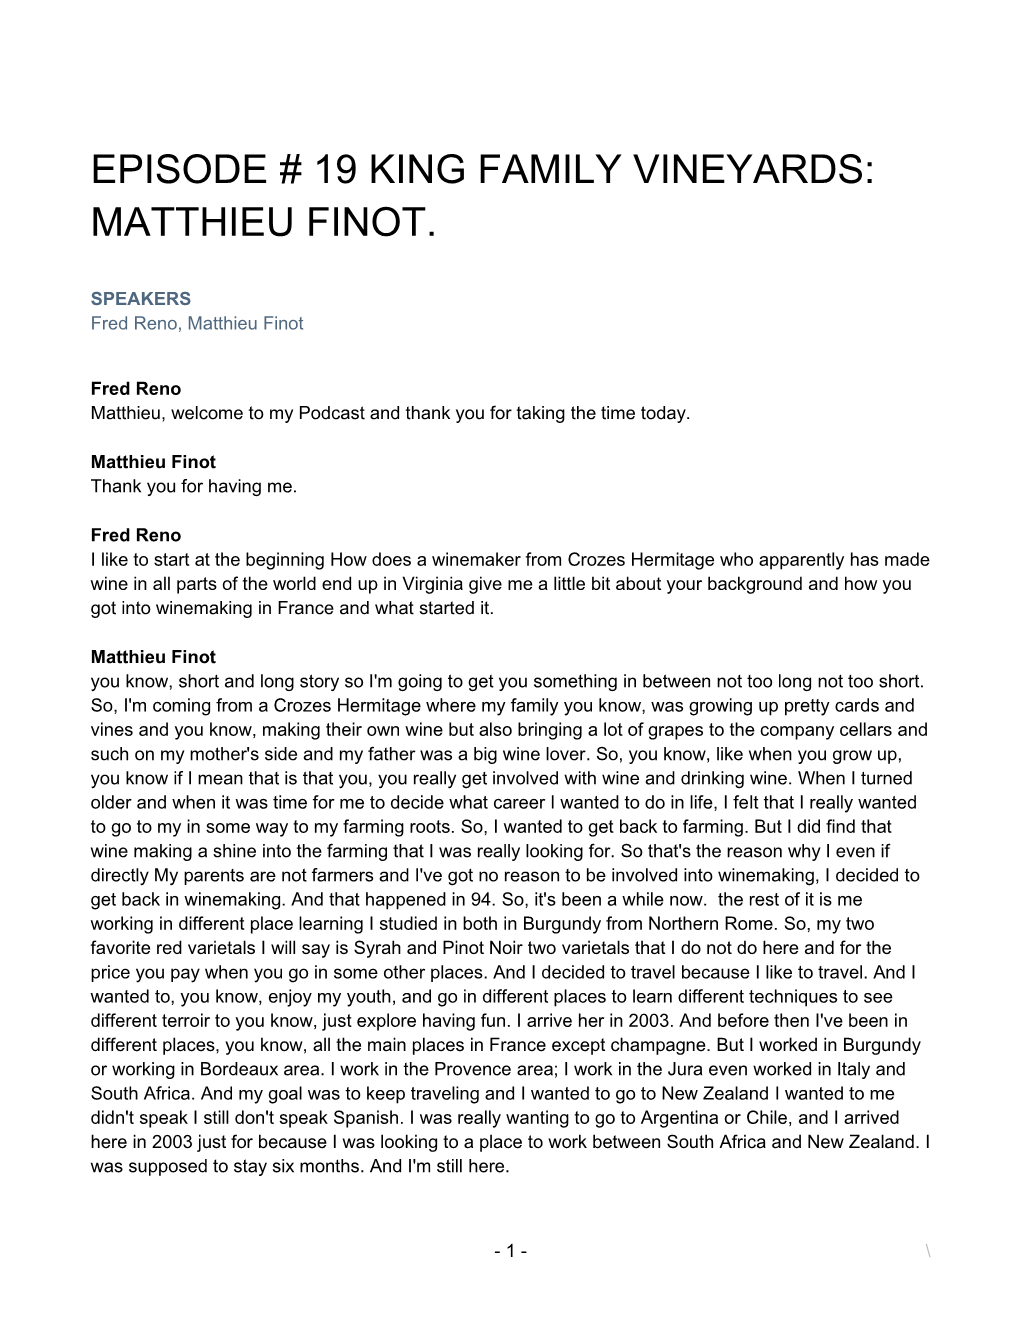 Episode # 19 King Family Vineyards: Matthieu Finot